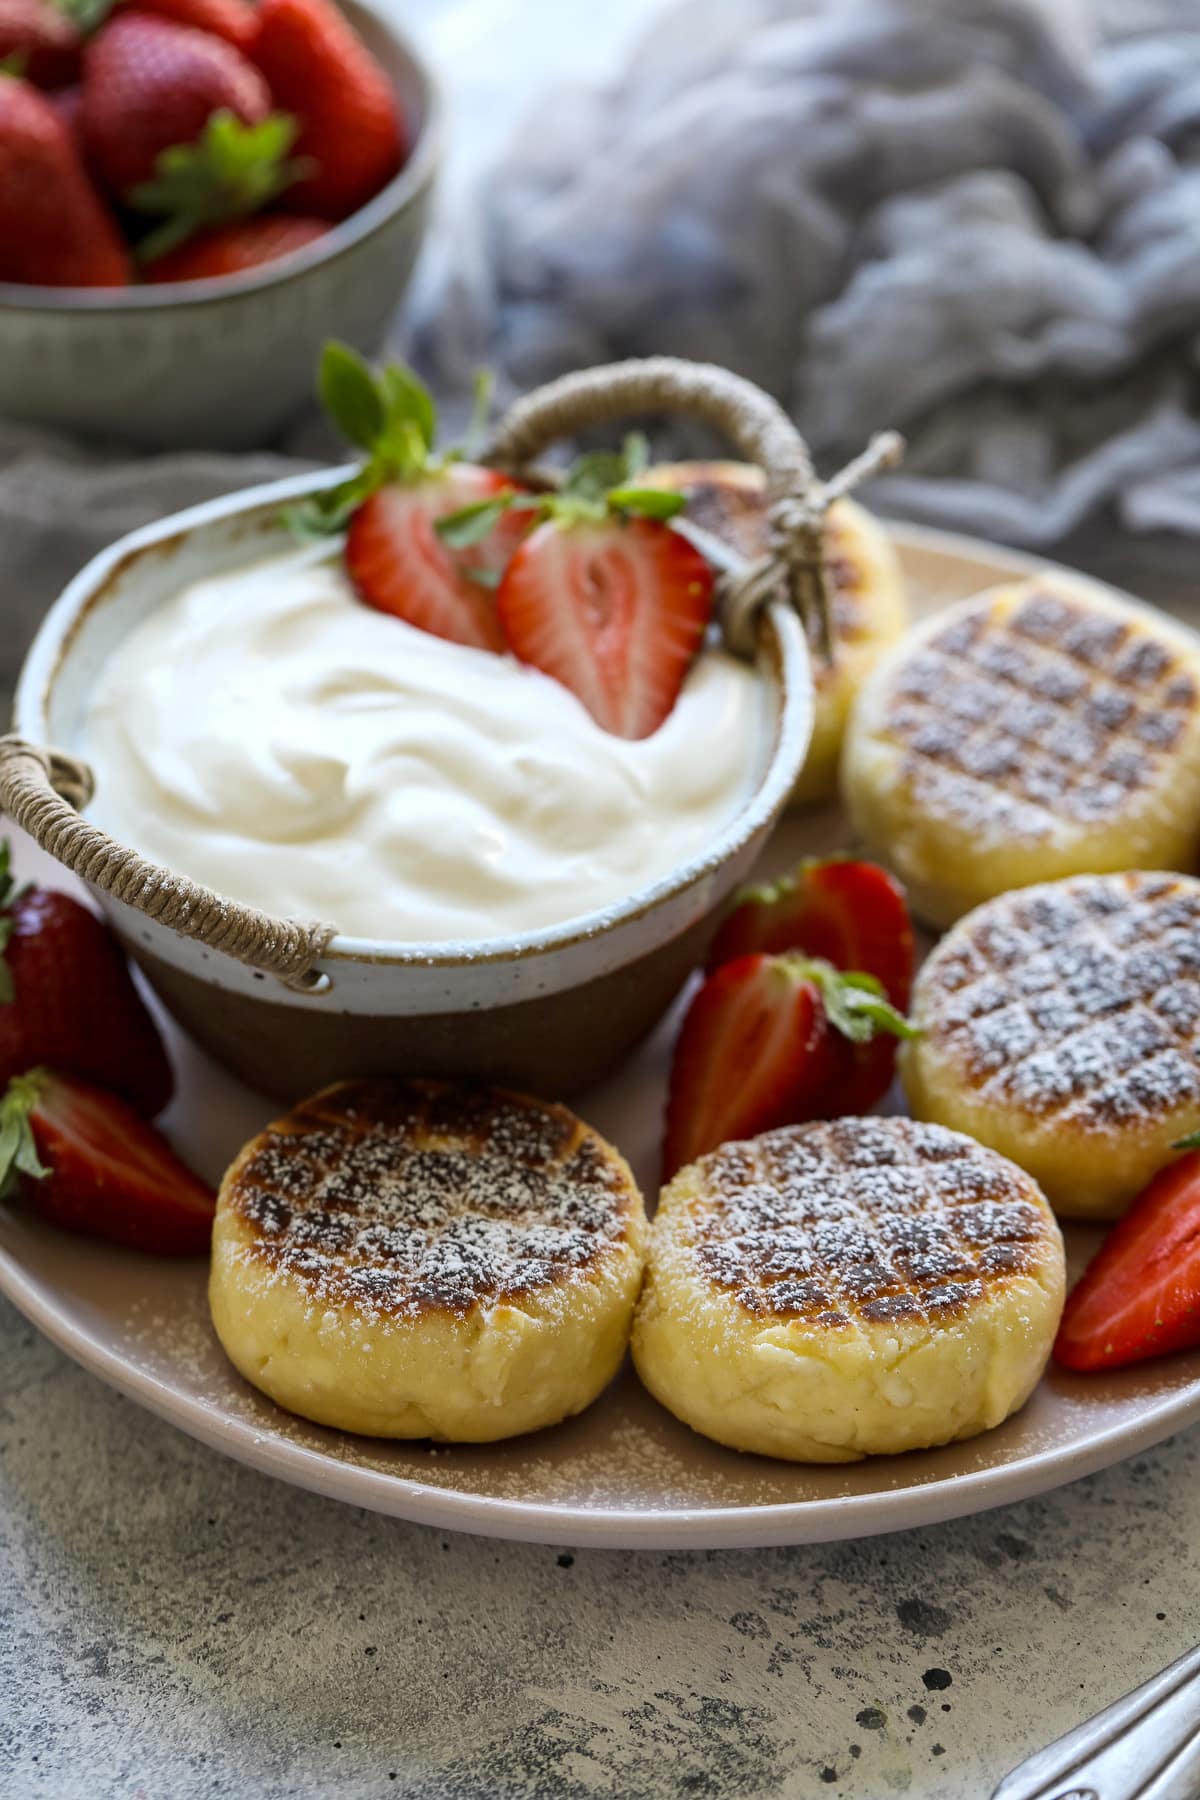 Russian Syrniki with yogurt and strawberries.